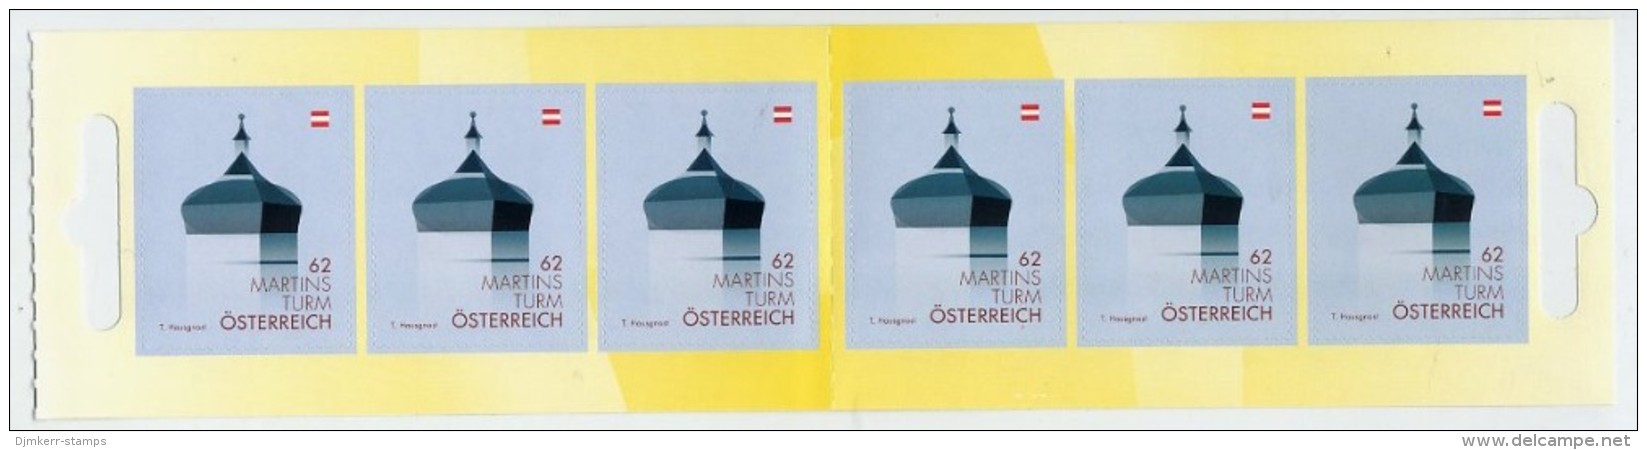 AUSTRIA 2013 Landmarks  Definitive 62 C. (Martinsturm) Retail Pack With 10 Stamps.  Michel MH 0-22 (3093) - Nuevos